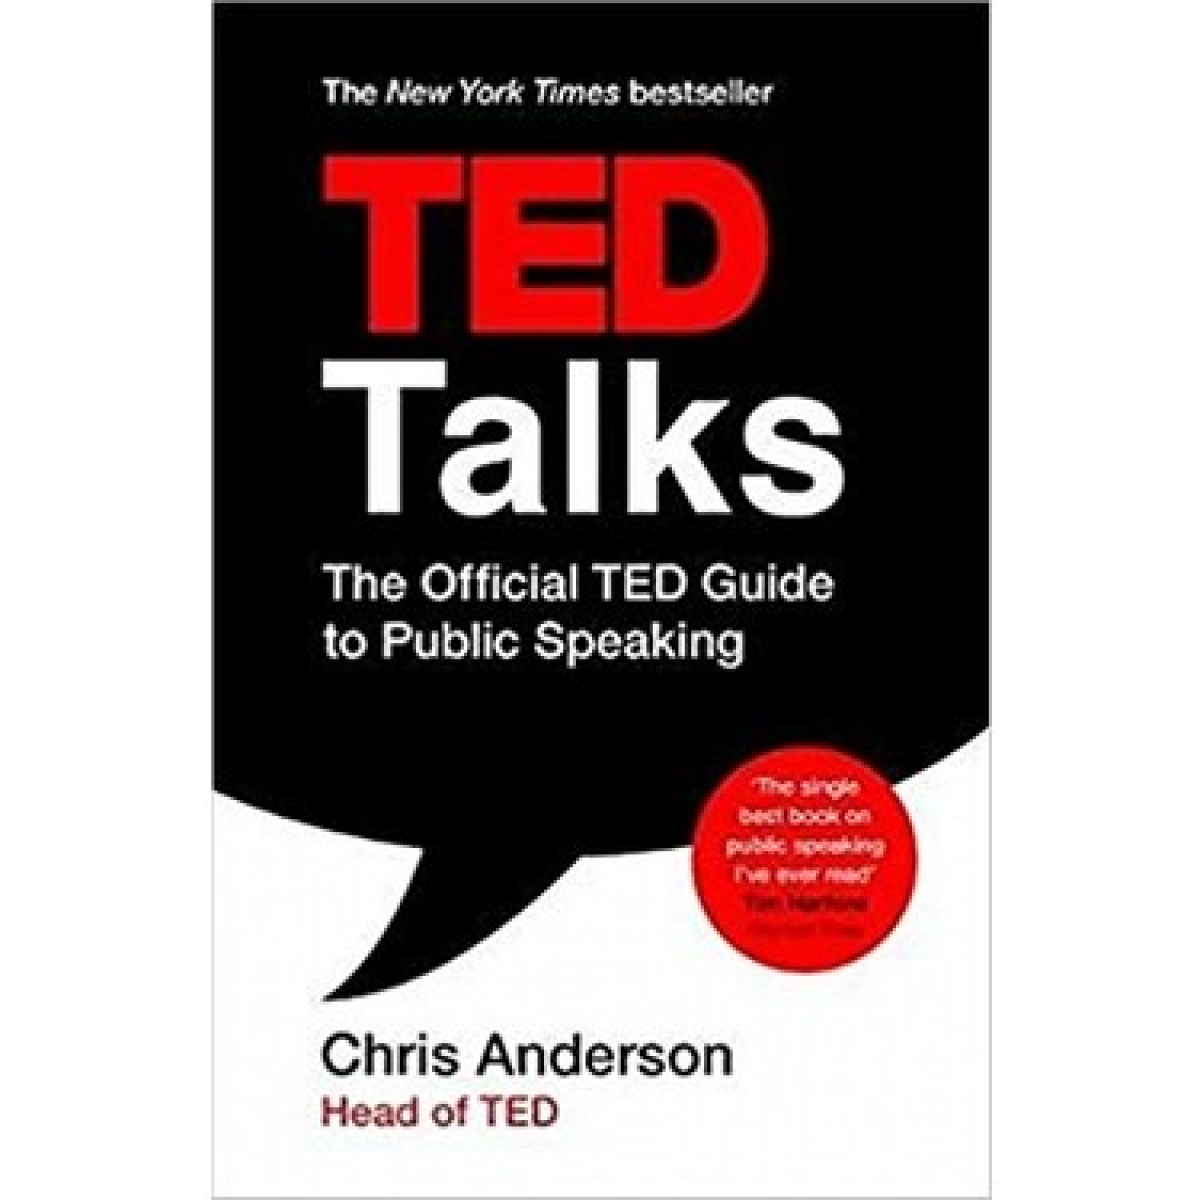 Ted talks. Ted book. Ted talks Restaurants. Speaking купить